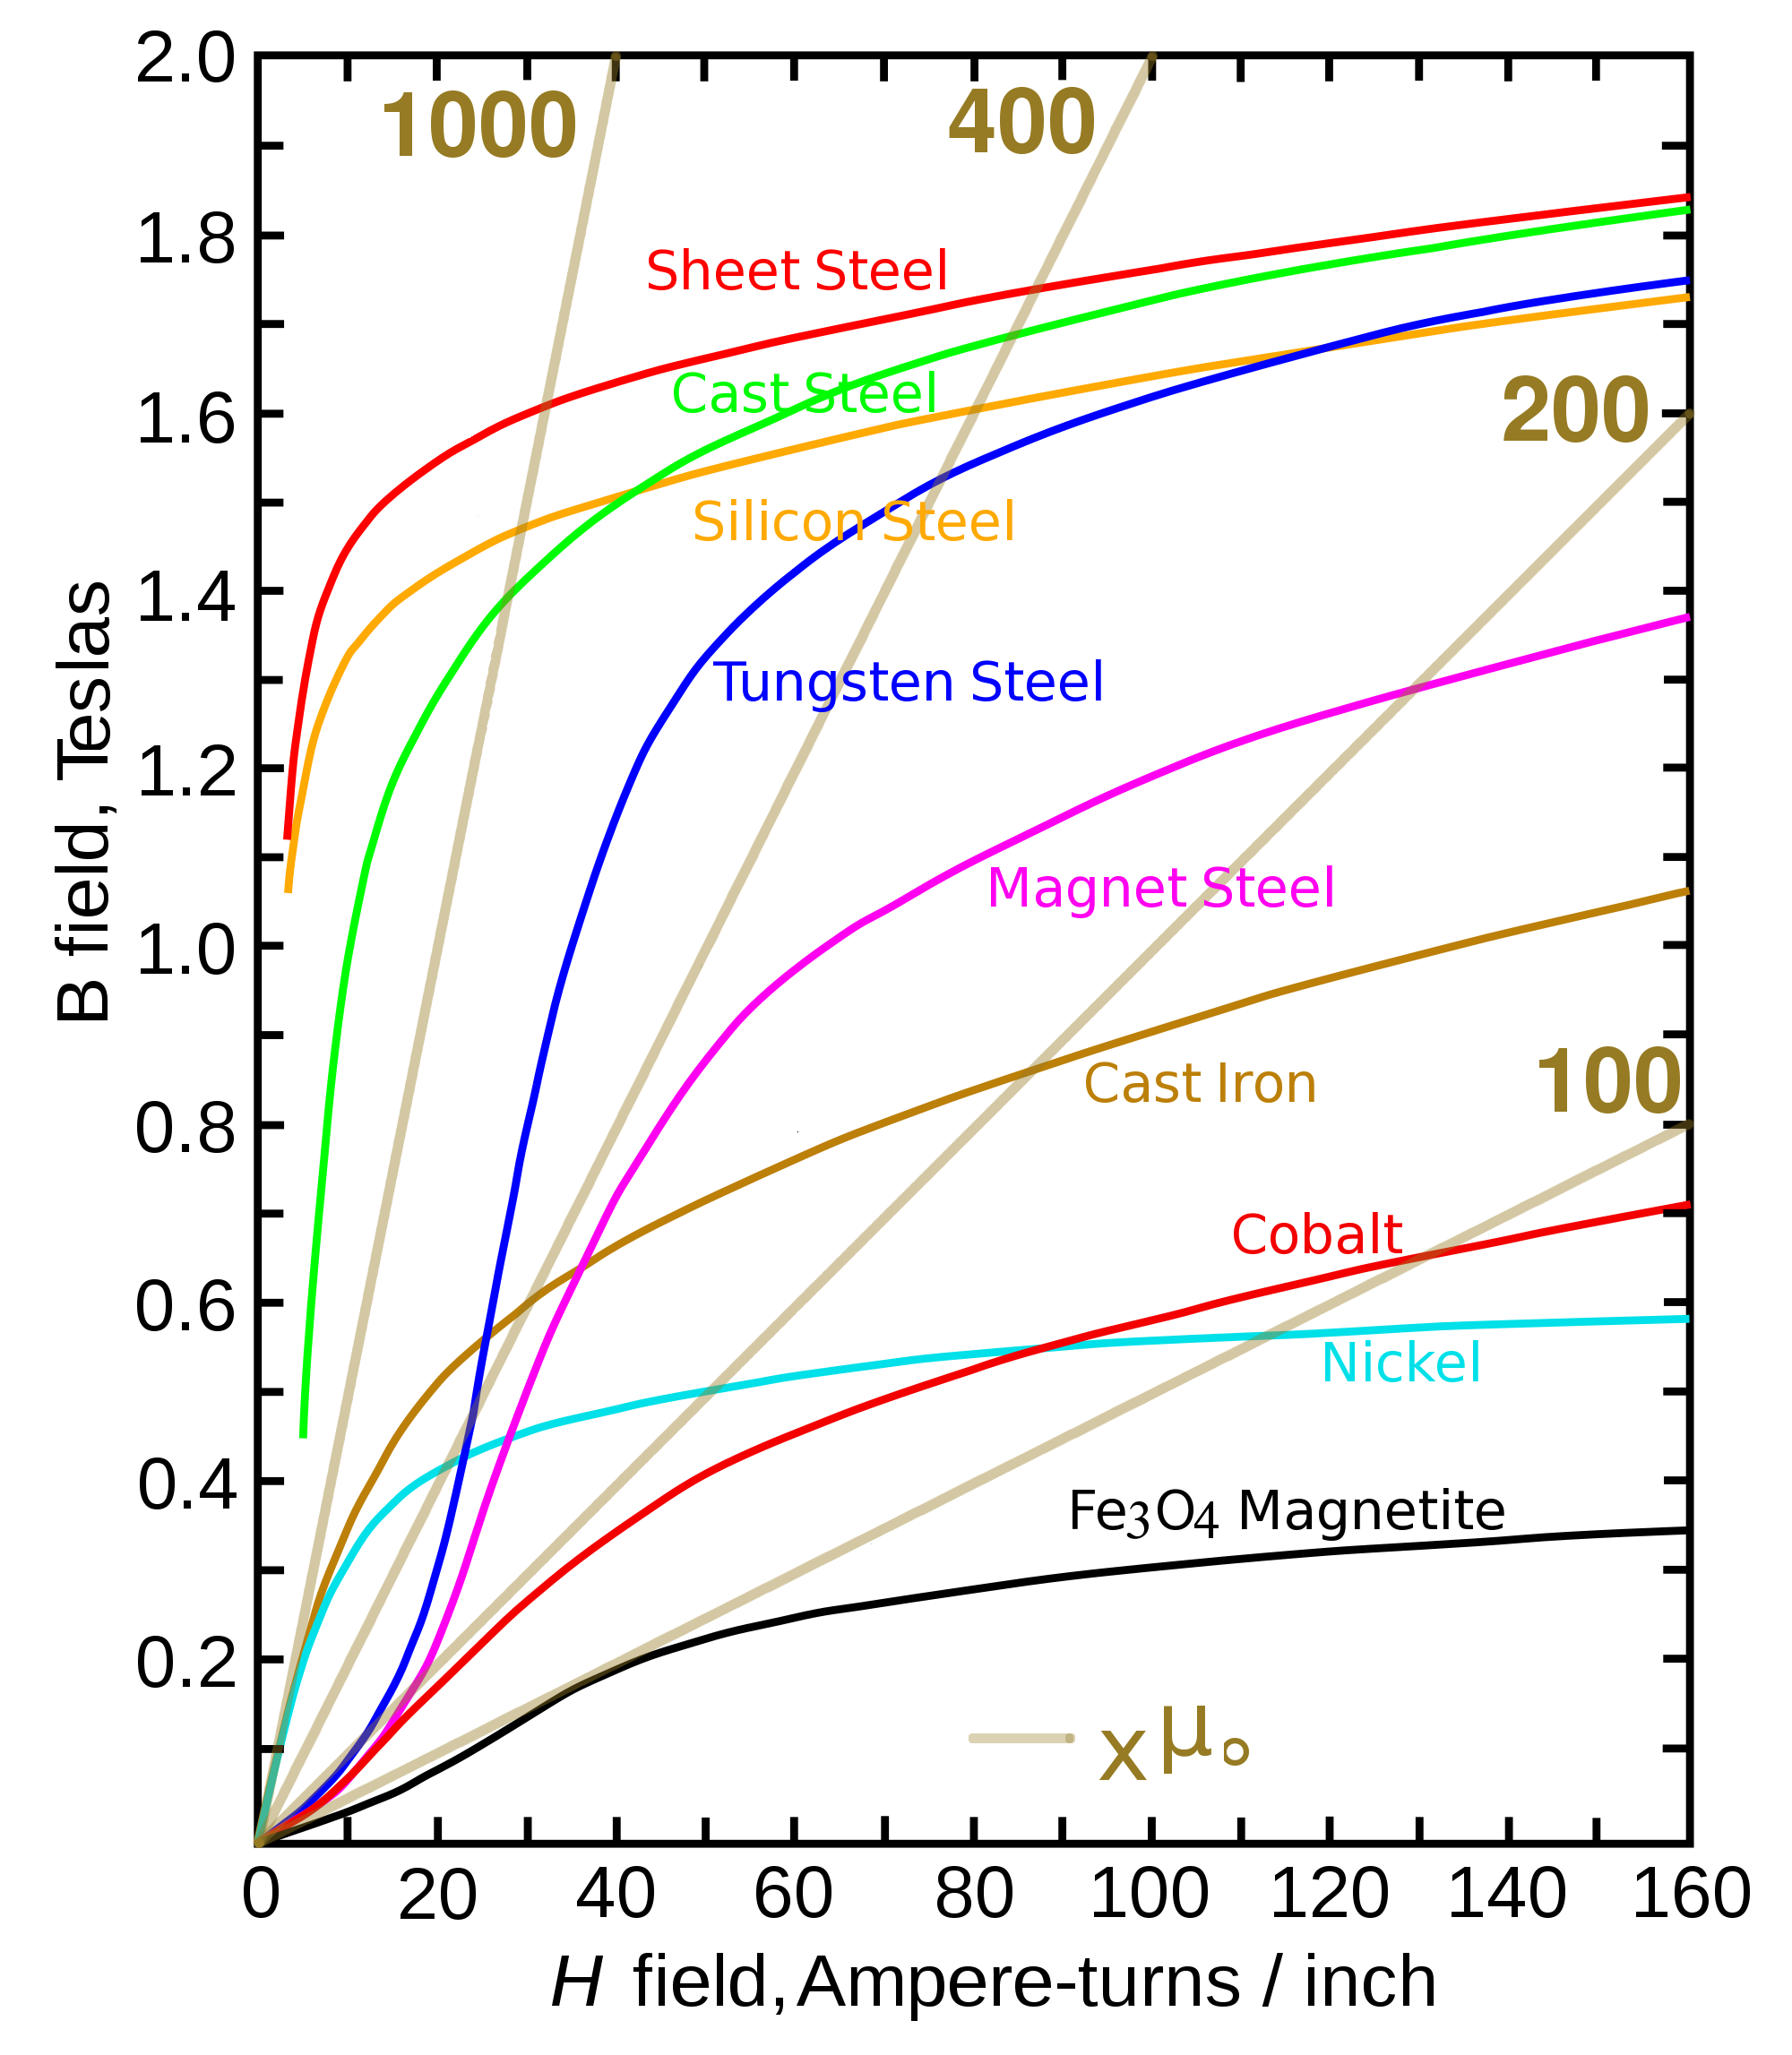 Magnetic Flux Versus Field for Ferromagnetic Materials